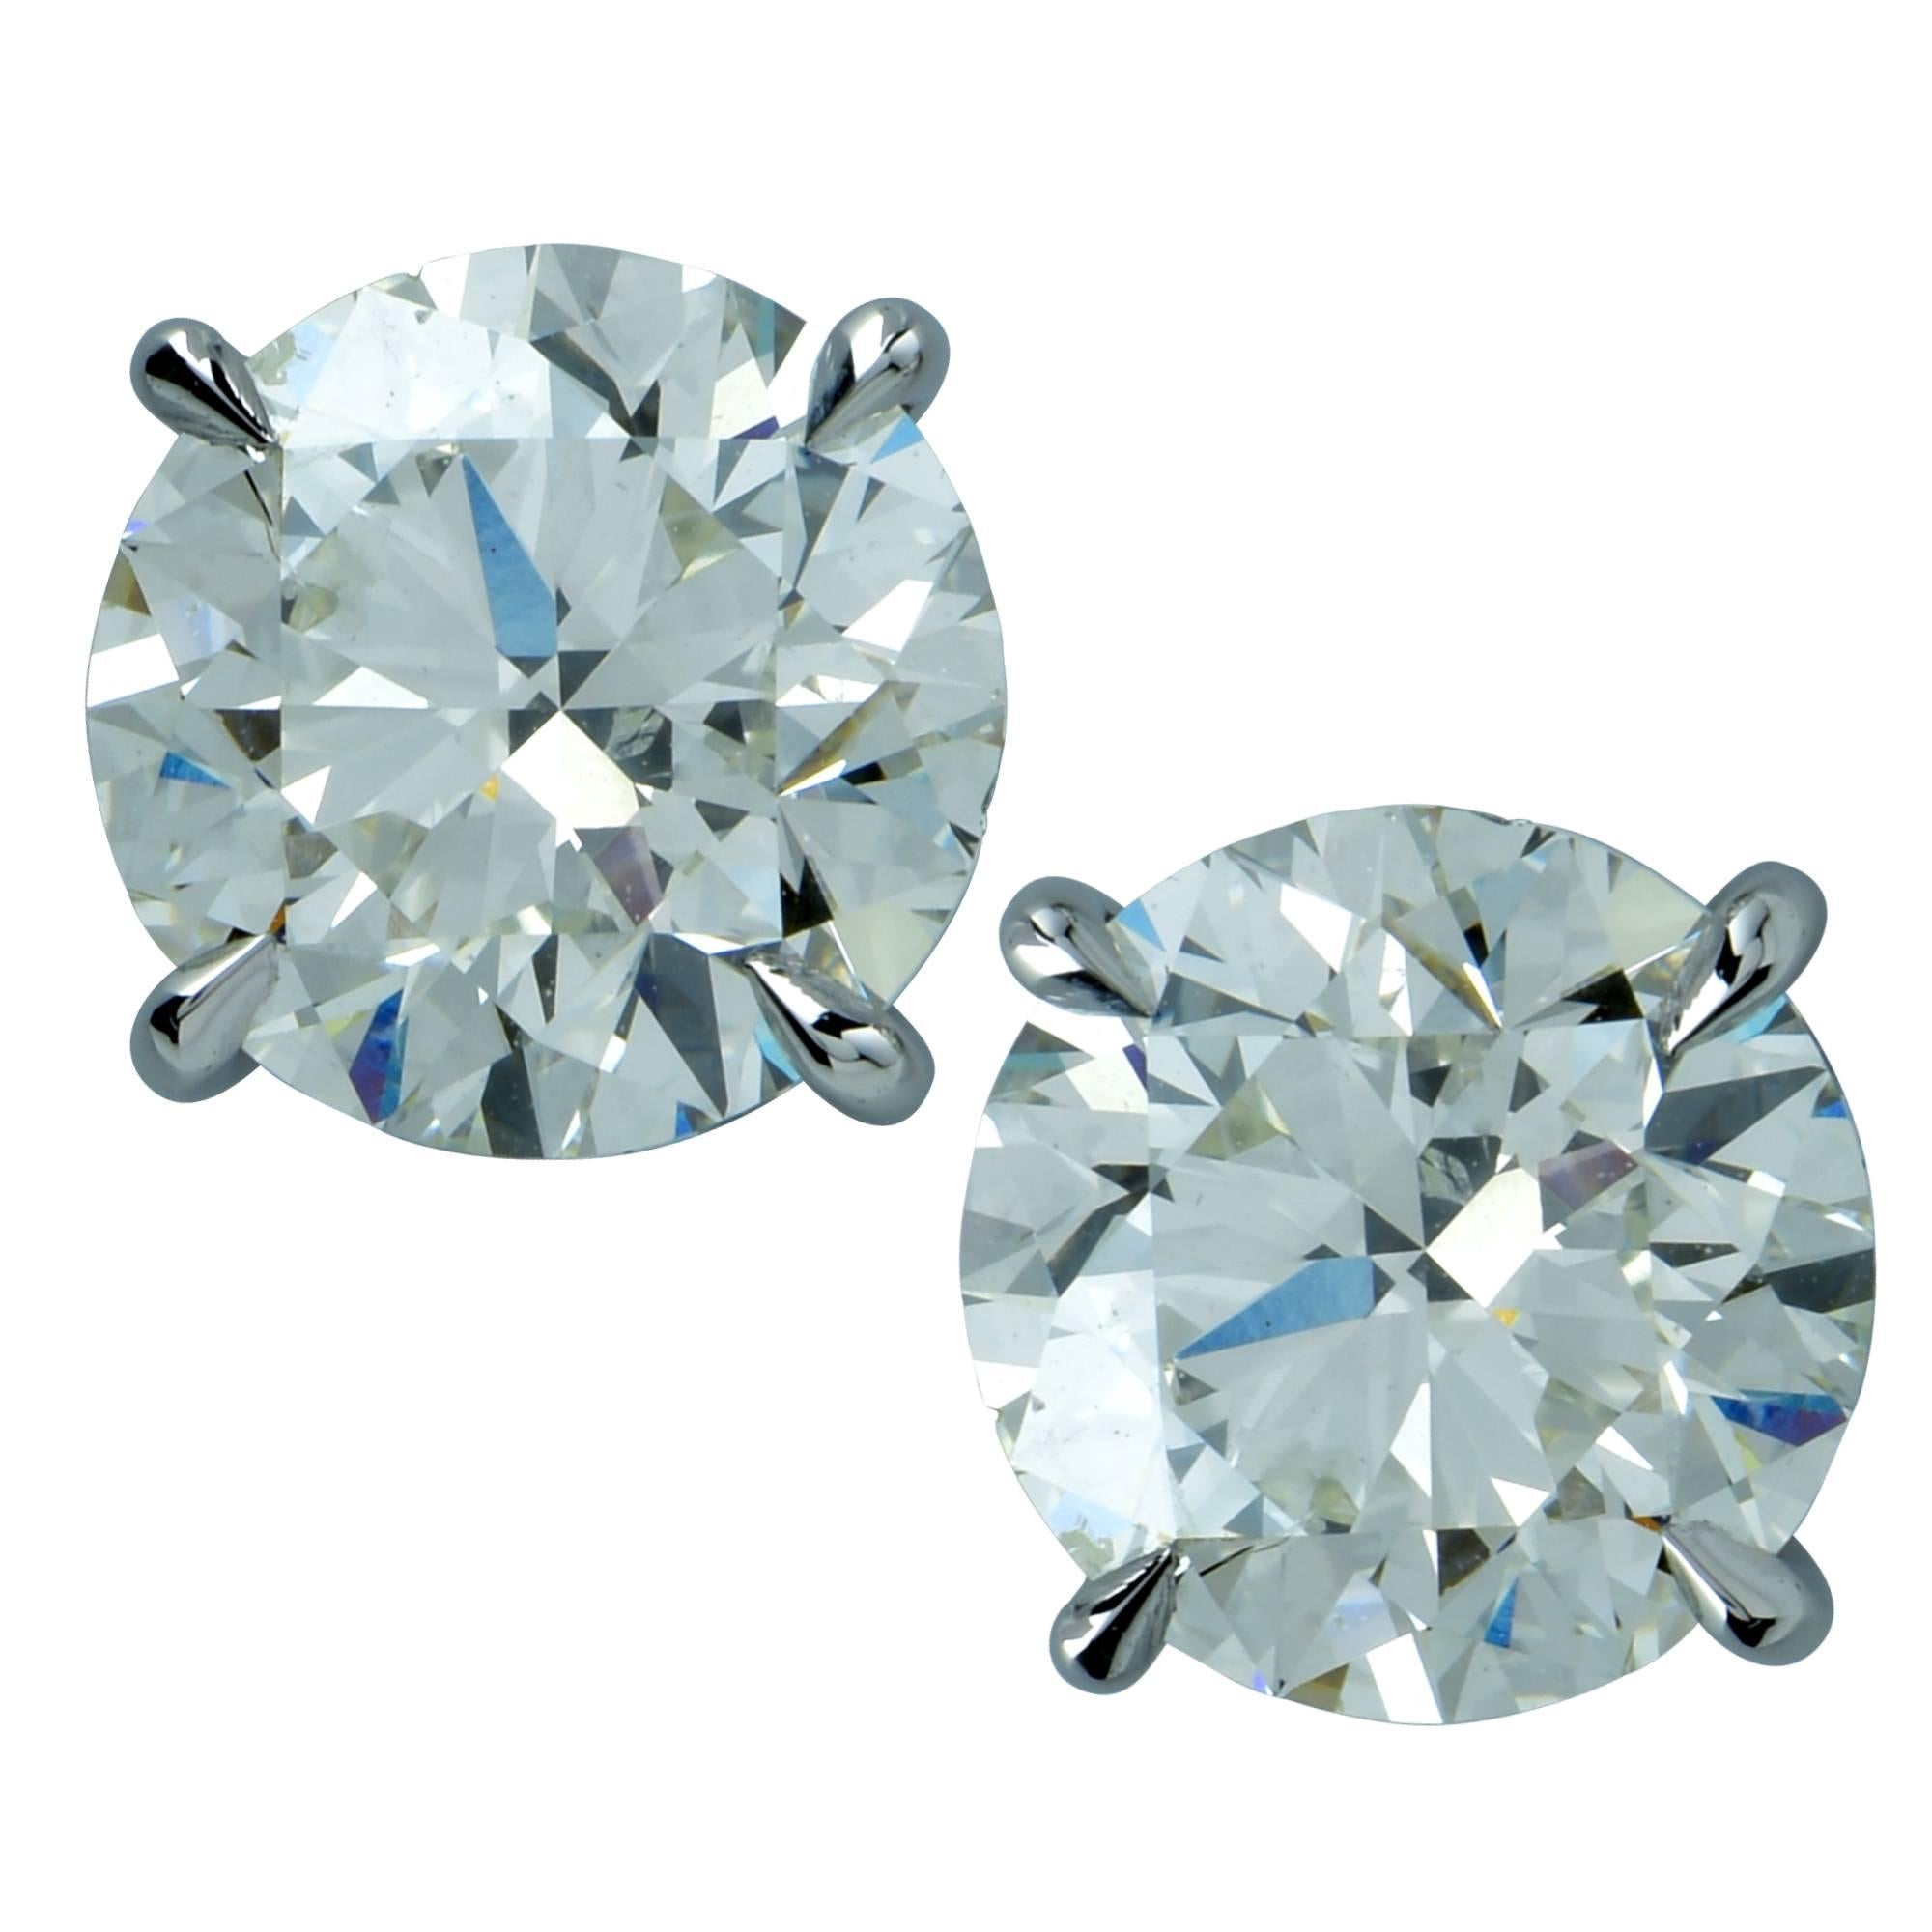 GIA Graded 3.01 Carat Diamond Solitaire Stud Earrings